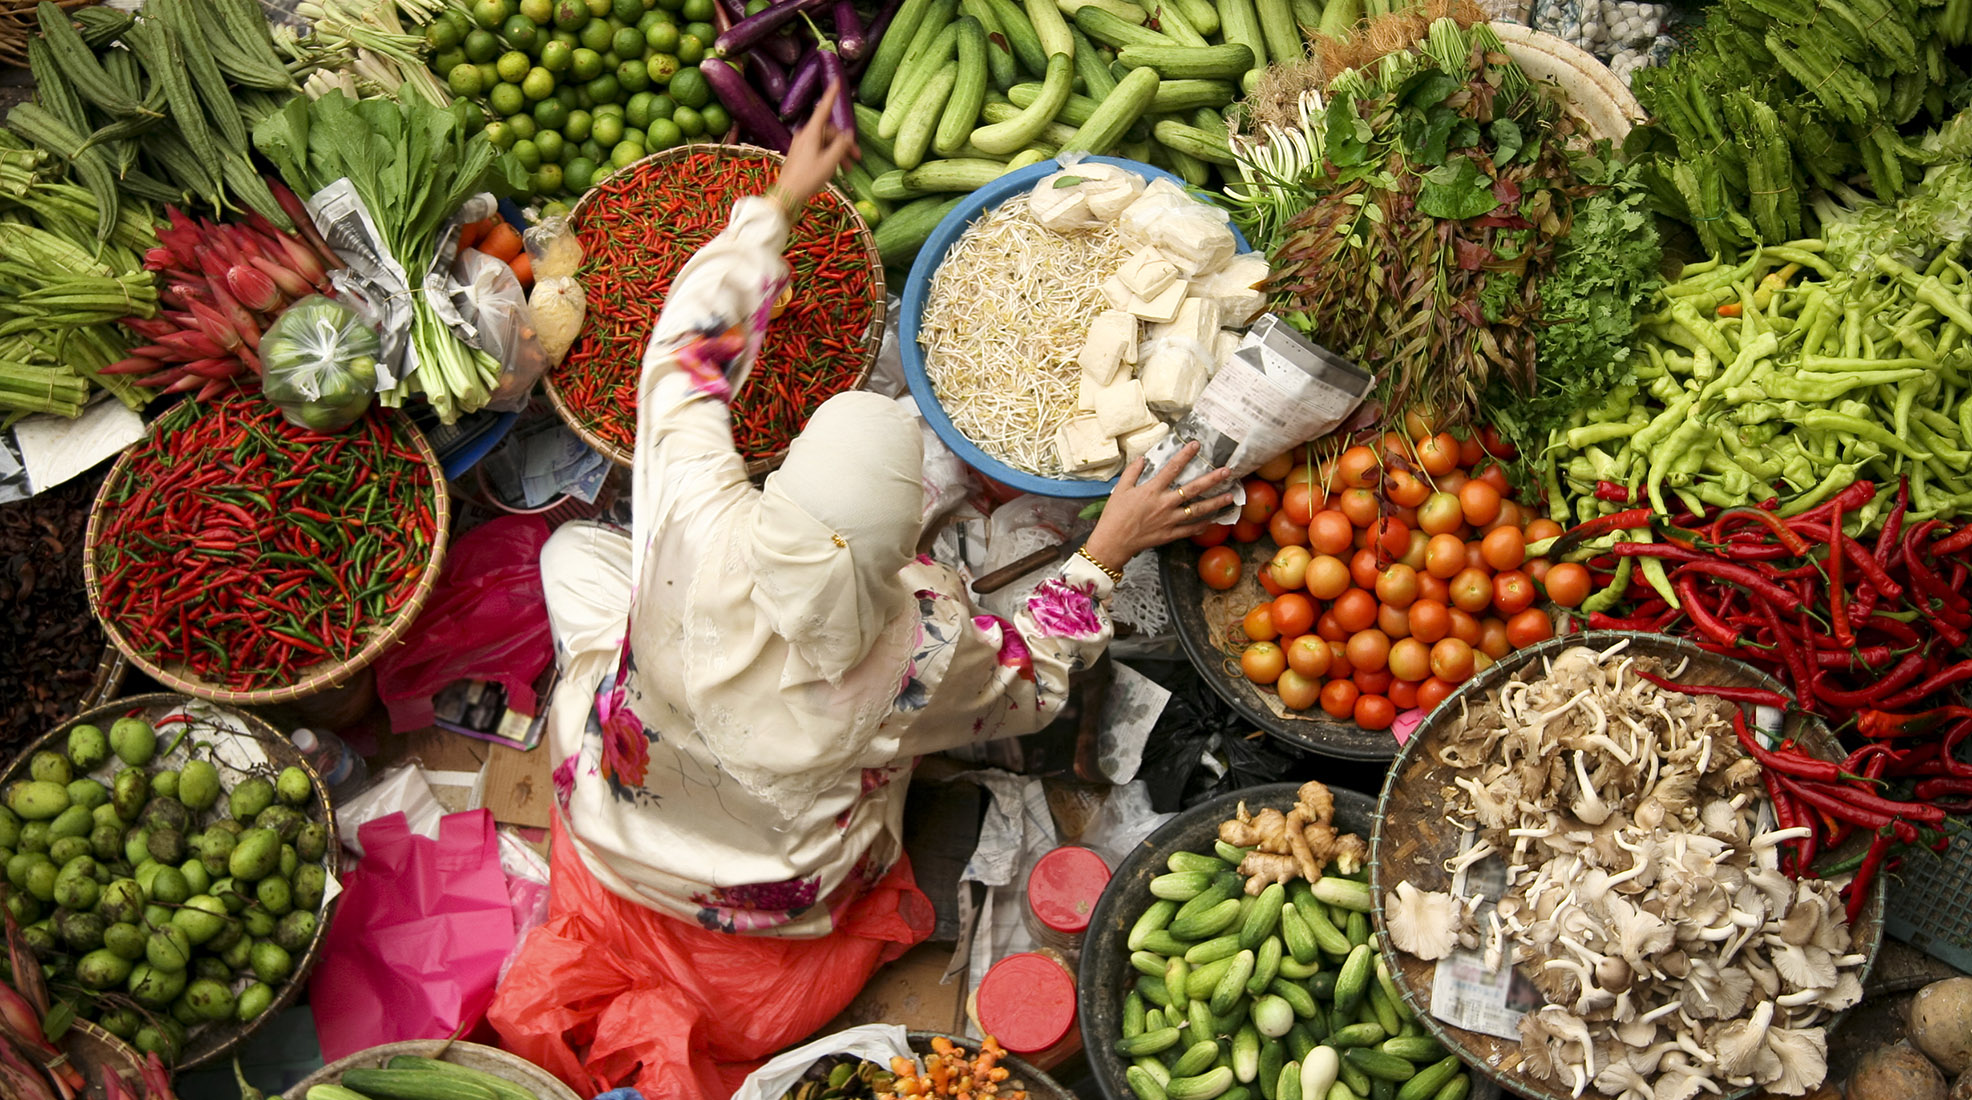 Woman selling fresh vegetables at a market in Kota Baru, Malaysia